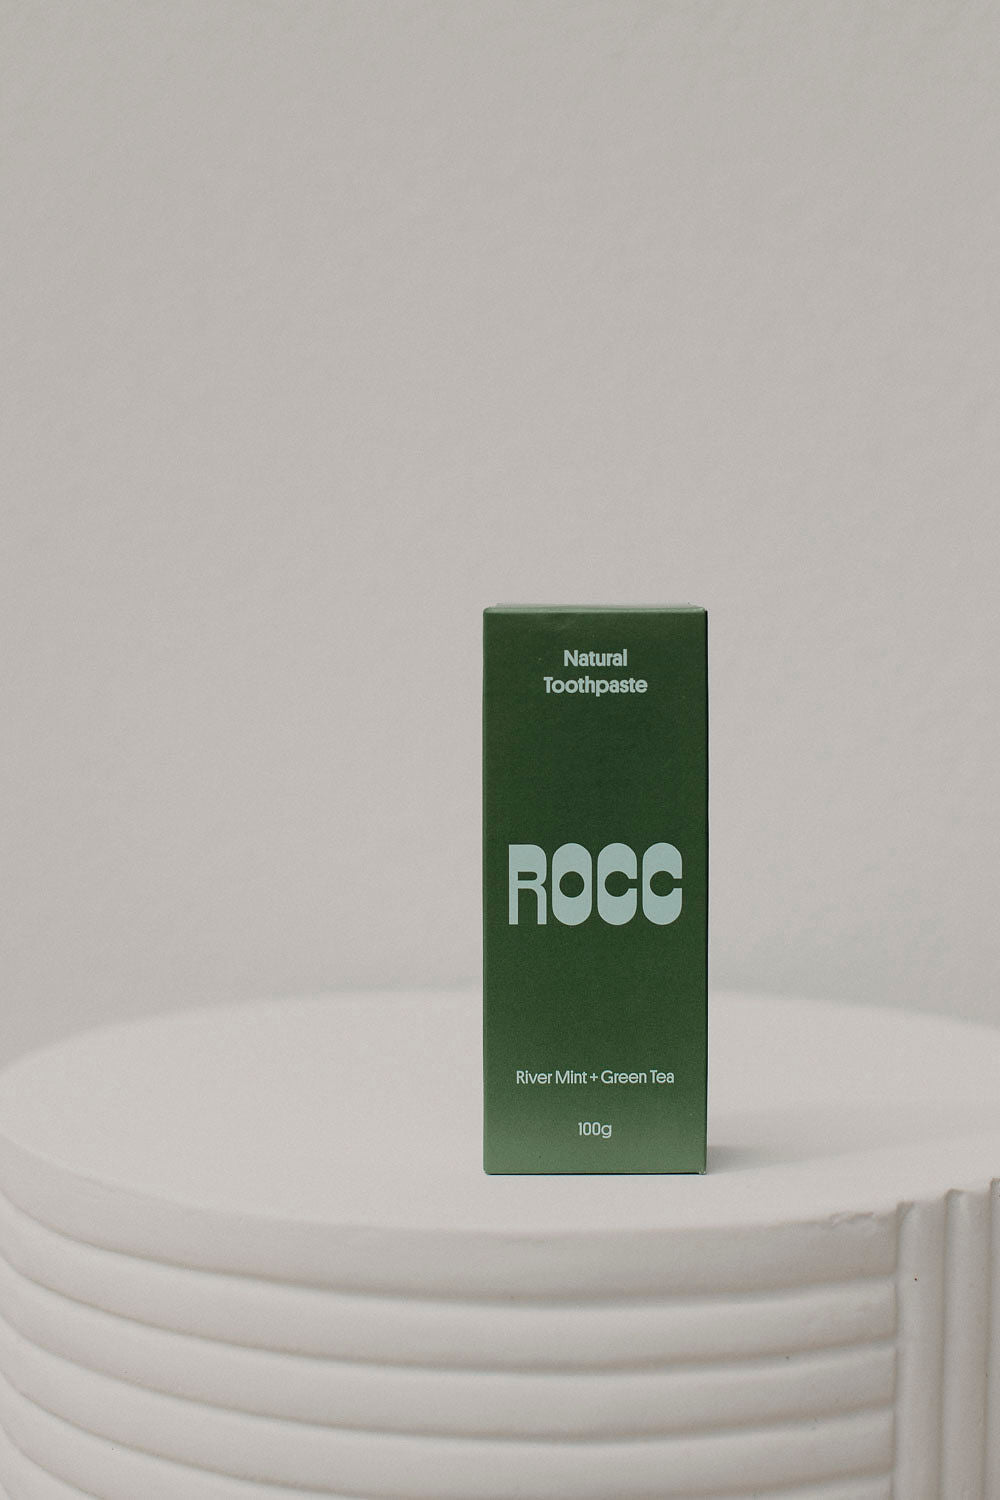 Rocc Naturals Toothpaste 100g - River Mint + Green Tea